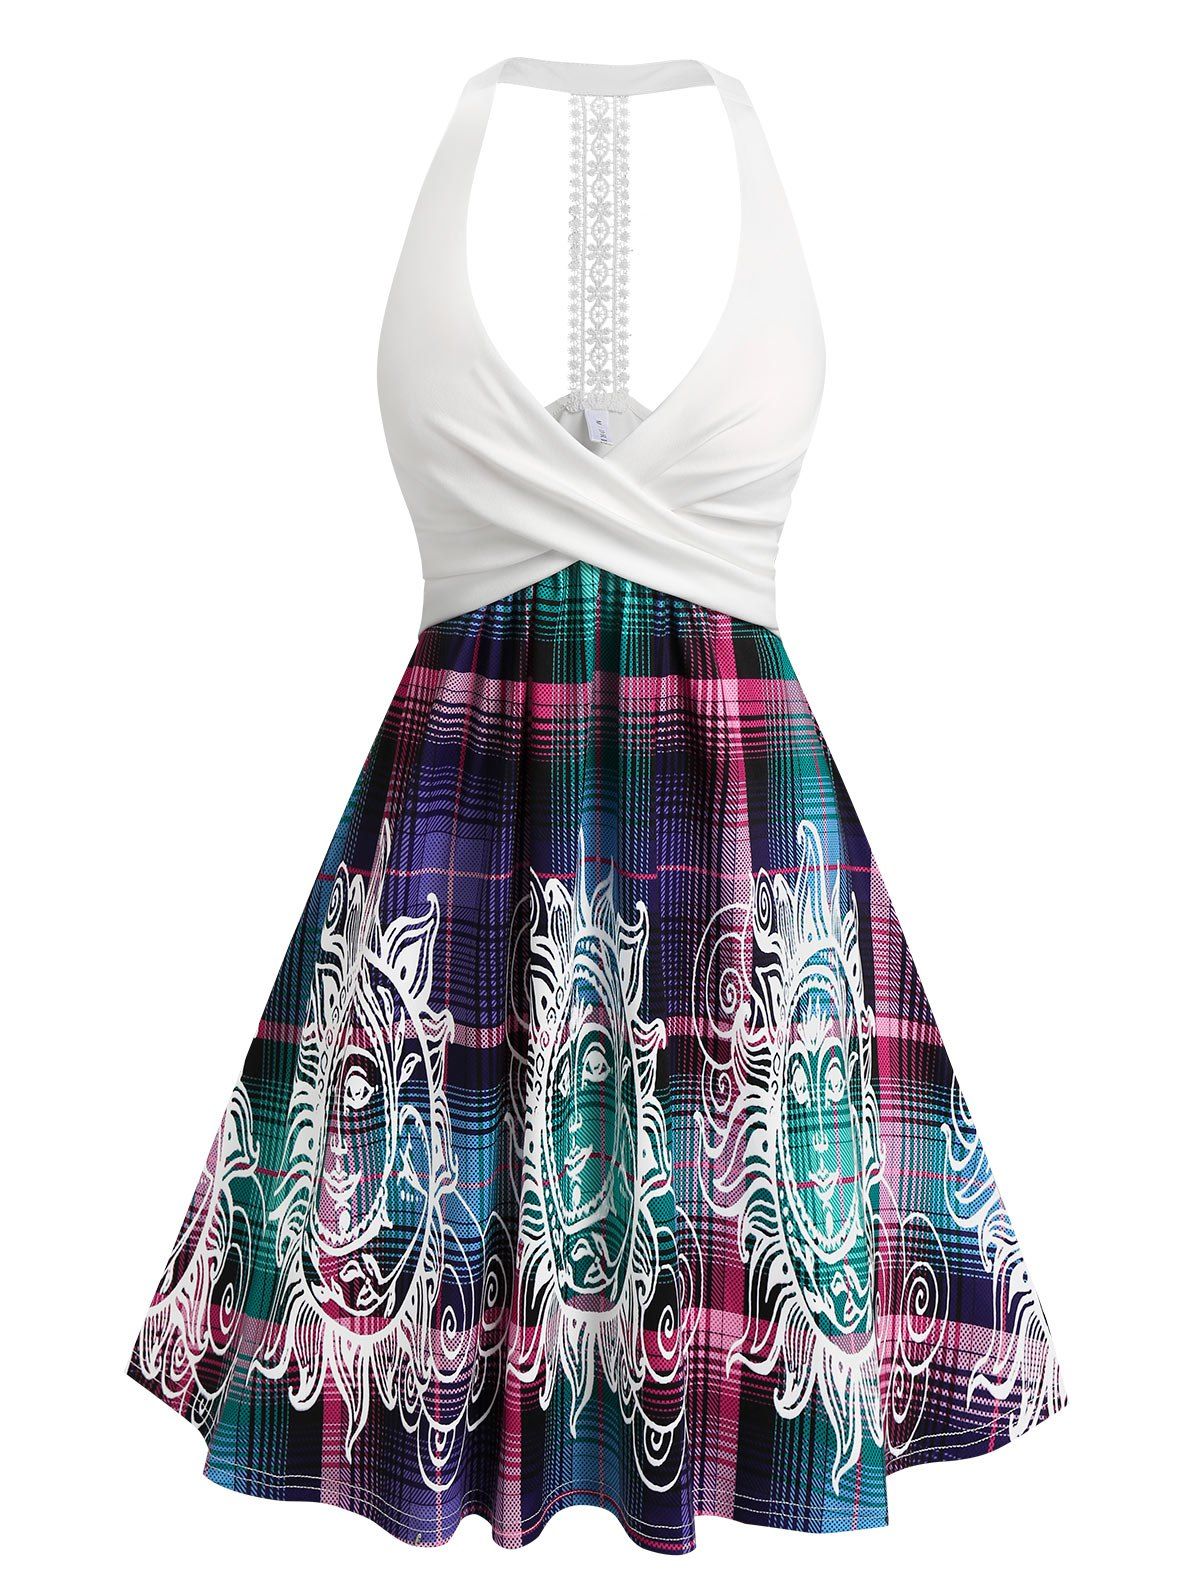 Celestial Sun Moon Print Mini Dress Crossover Plunging A Line Dress Lace Insert Sleeveless Dress - PURPLE XXXL